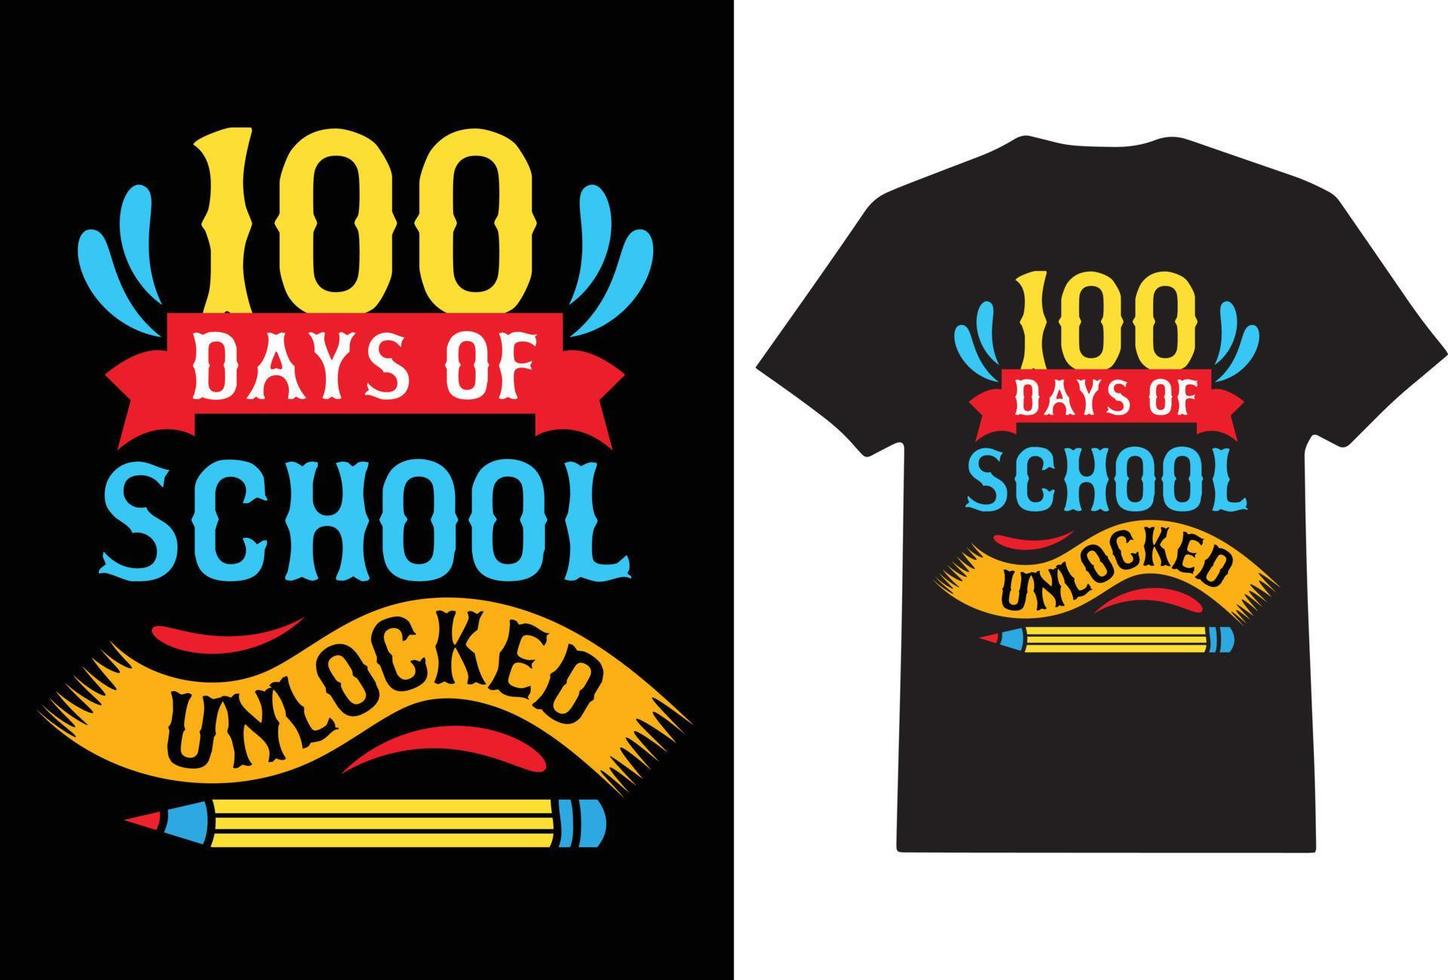 Happy 100 Day of School T-Shirt Design druckfertige Vektordatei vektor